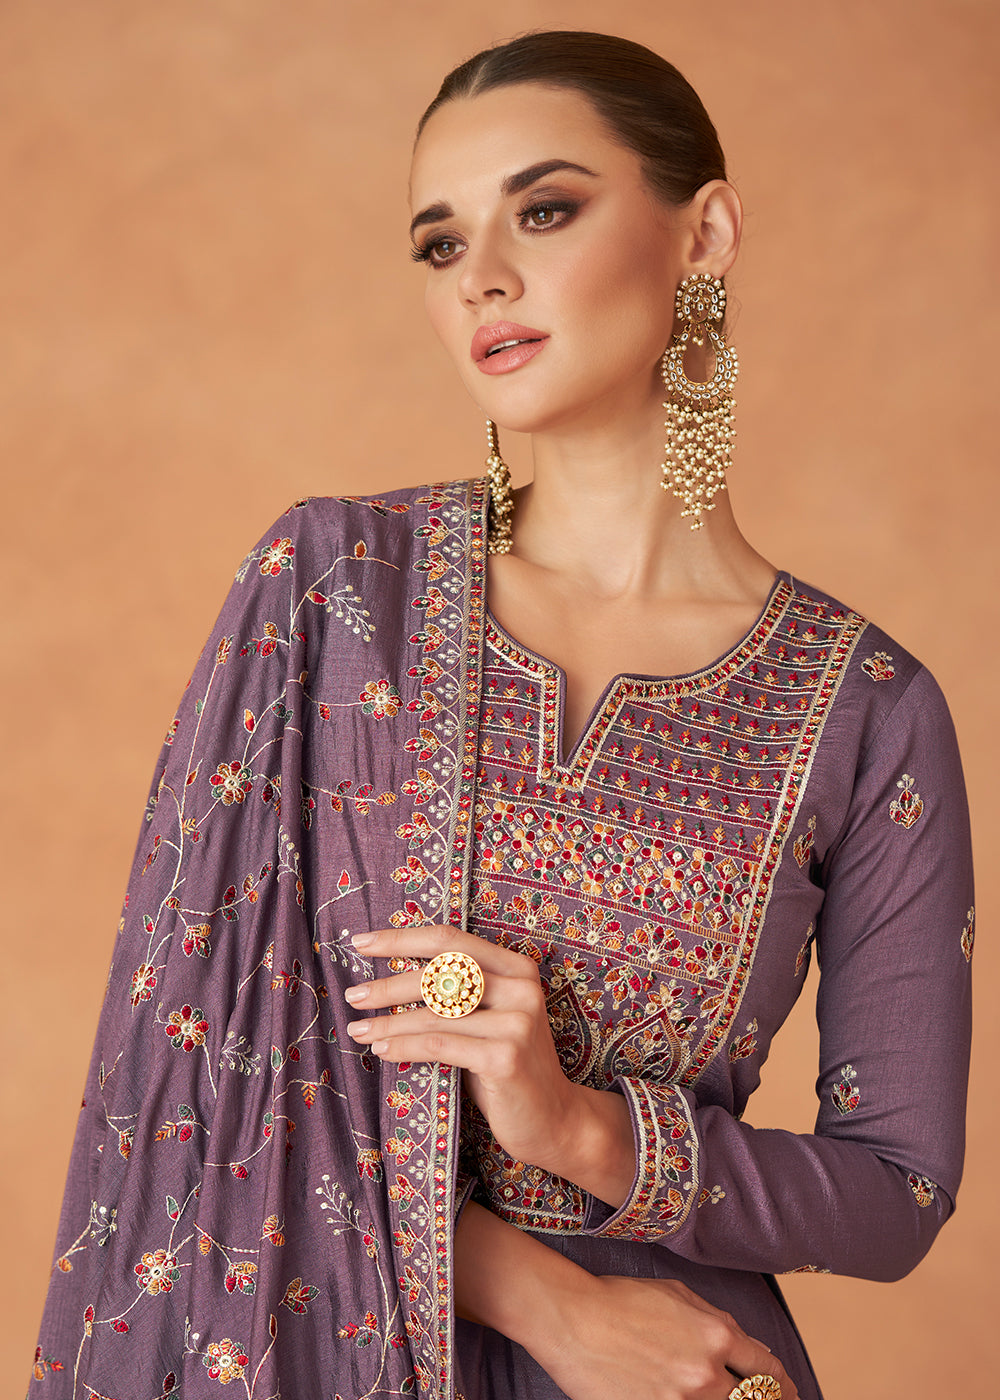 Buy Now Premium Purple Sequins & Thread Designer Anarkali Suit Online in USA, UK, Australia, New Zealand, Canada & Worldwide at Empress Clothing.